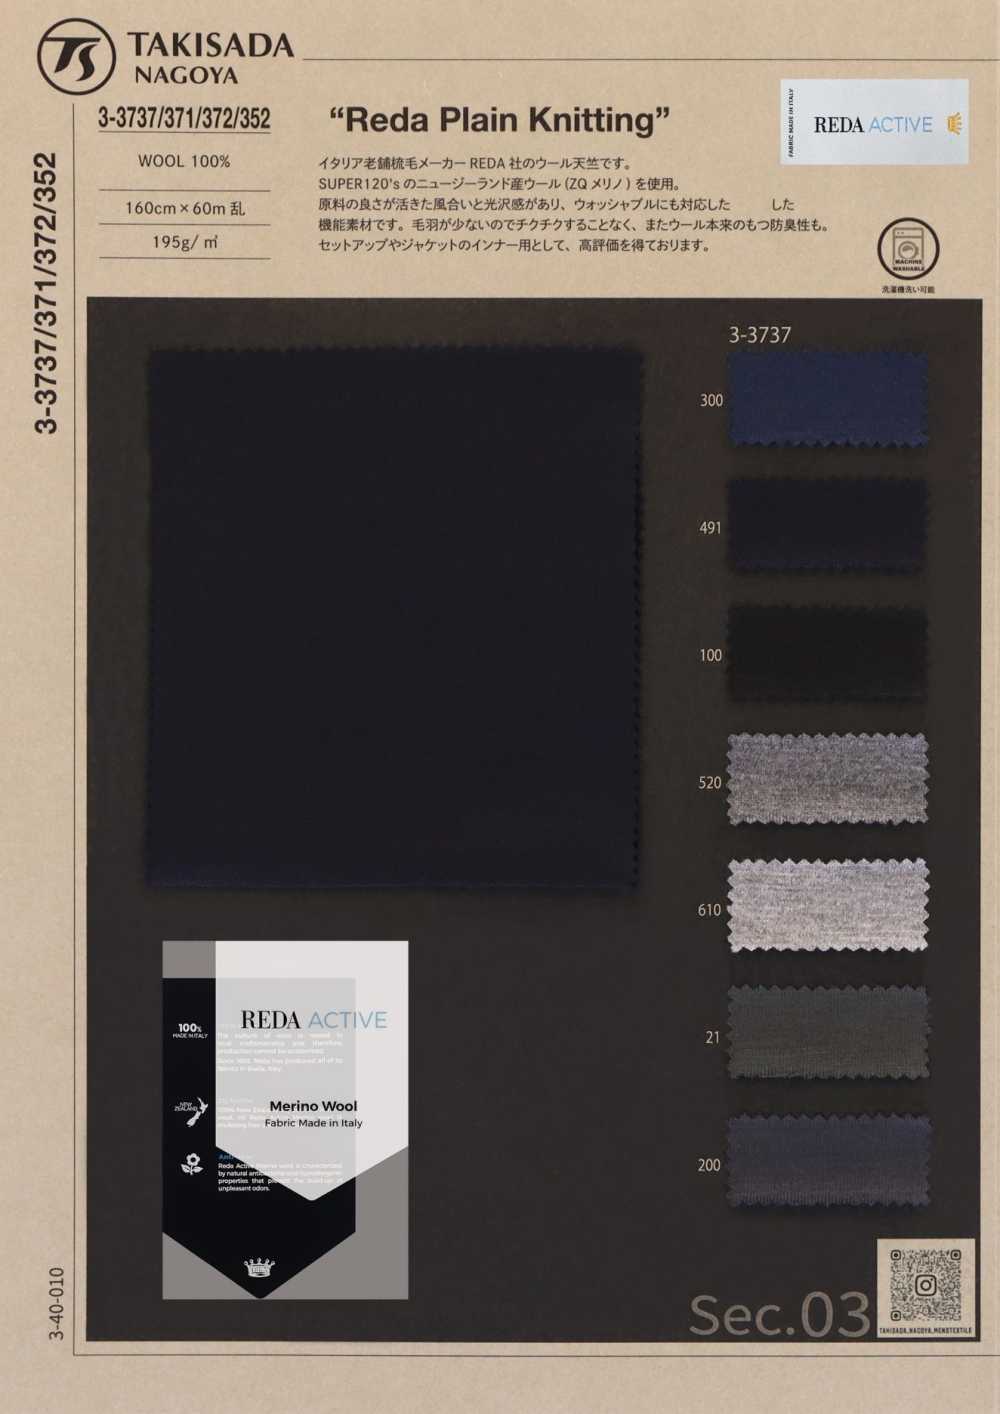 3-3737 REDA ACTIVE Uni-Wollstrick[Textilgewebe] Takisada Nagoya